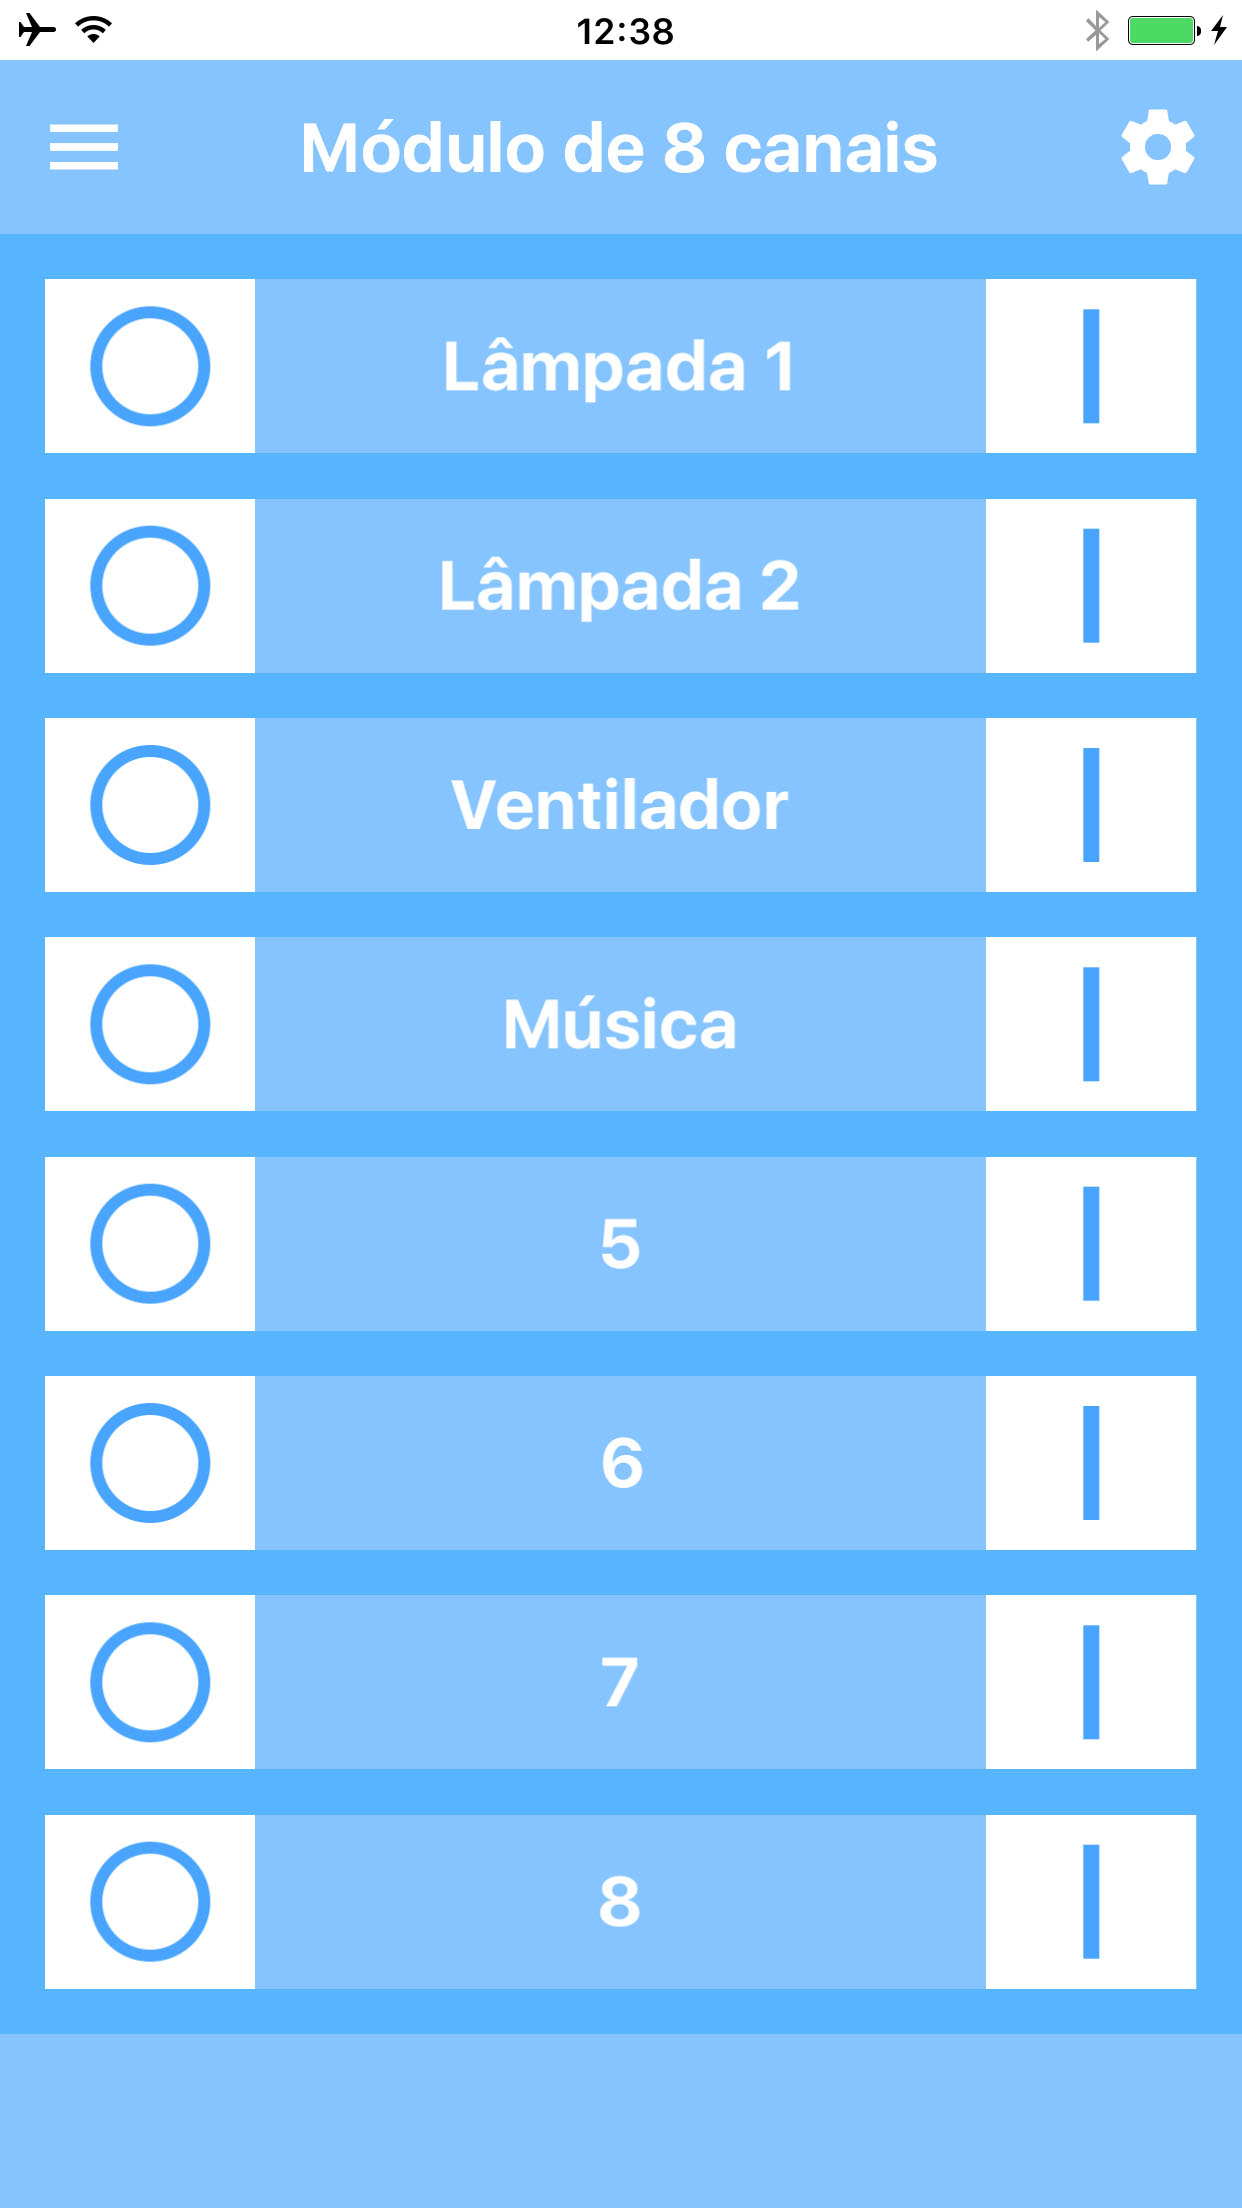 Módulo de relé de 8 canais (iPhone app)